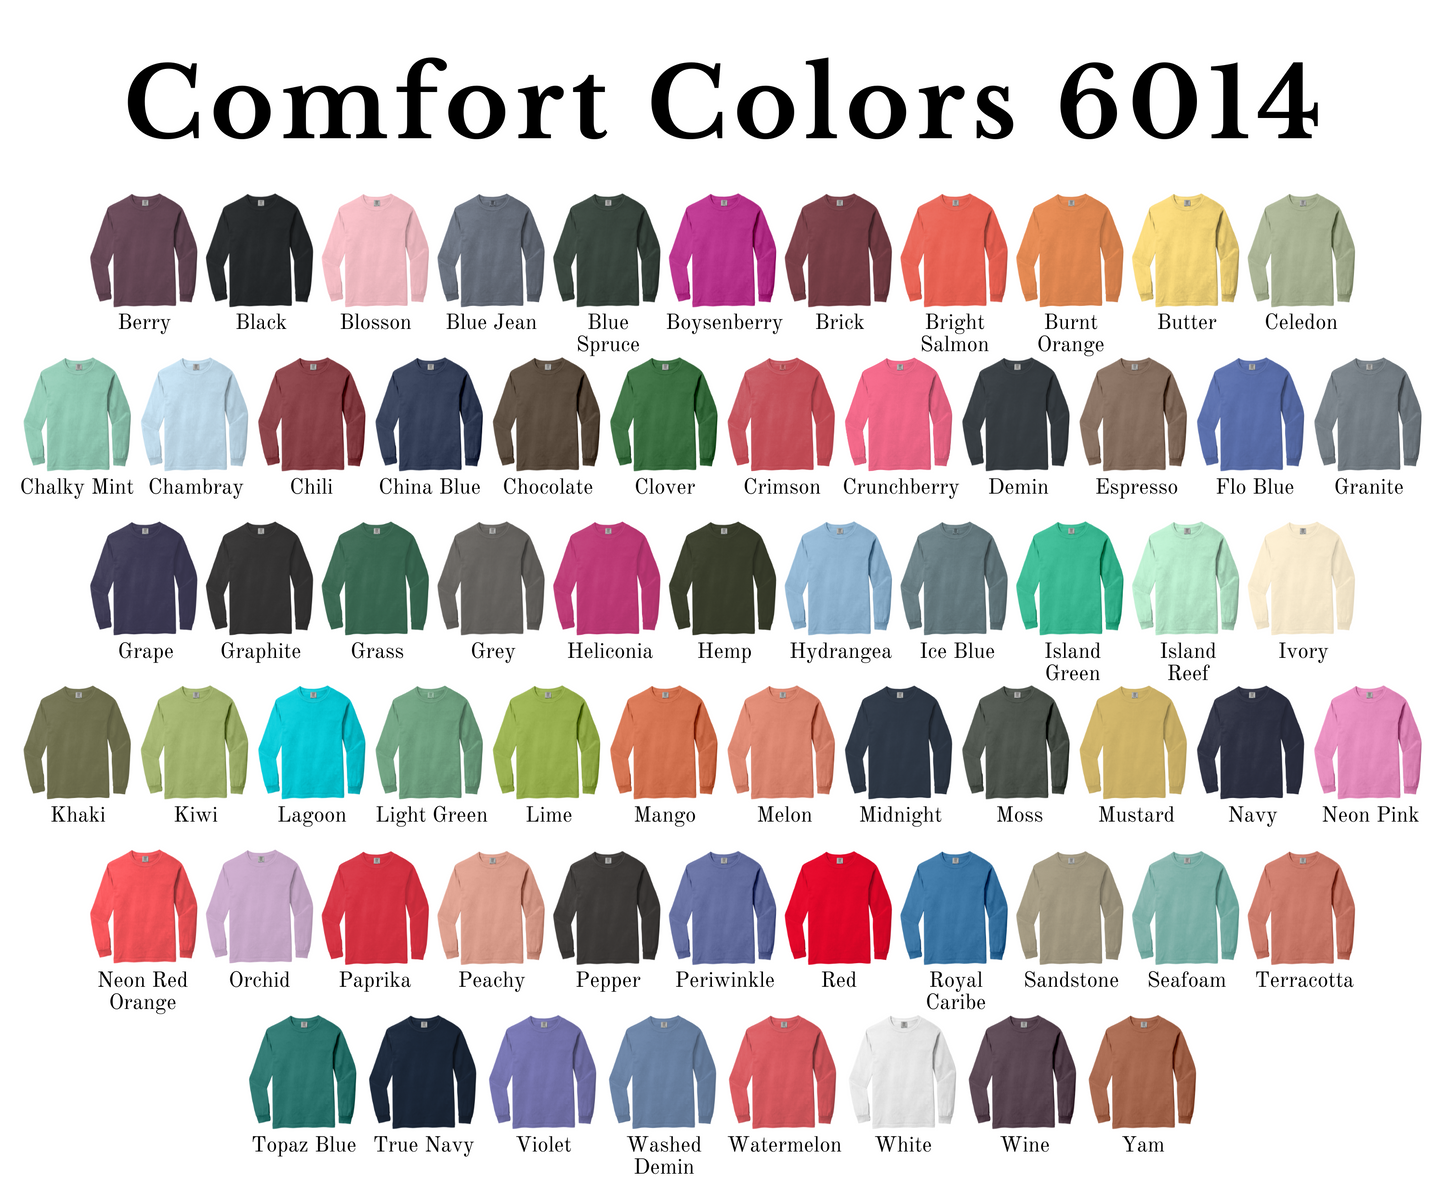 Part 2: Adult Long Sleeve | Comfort Color